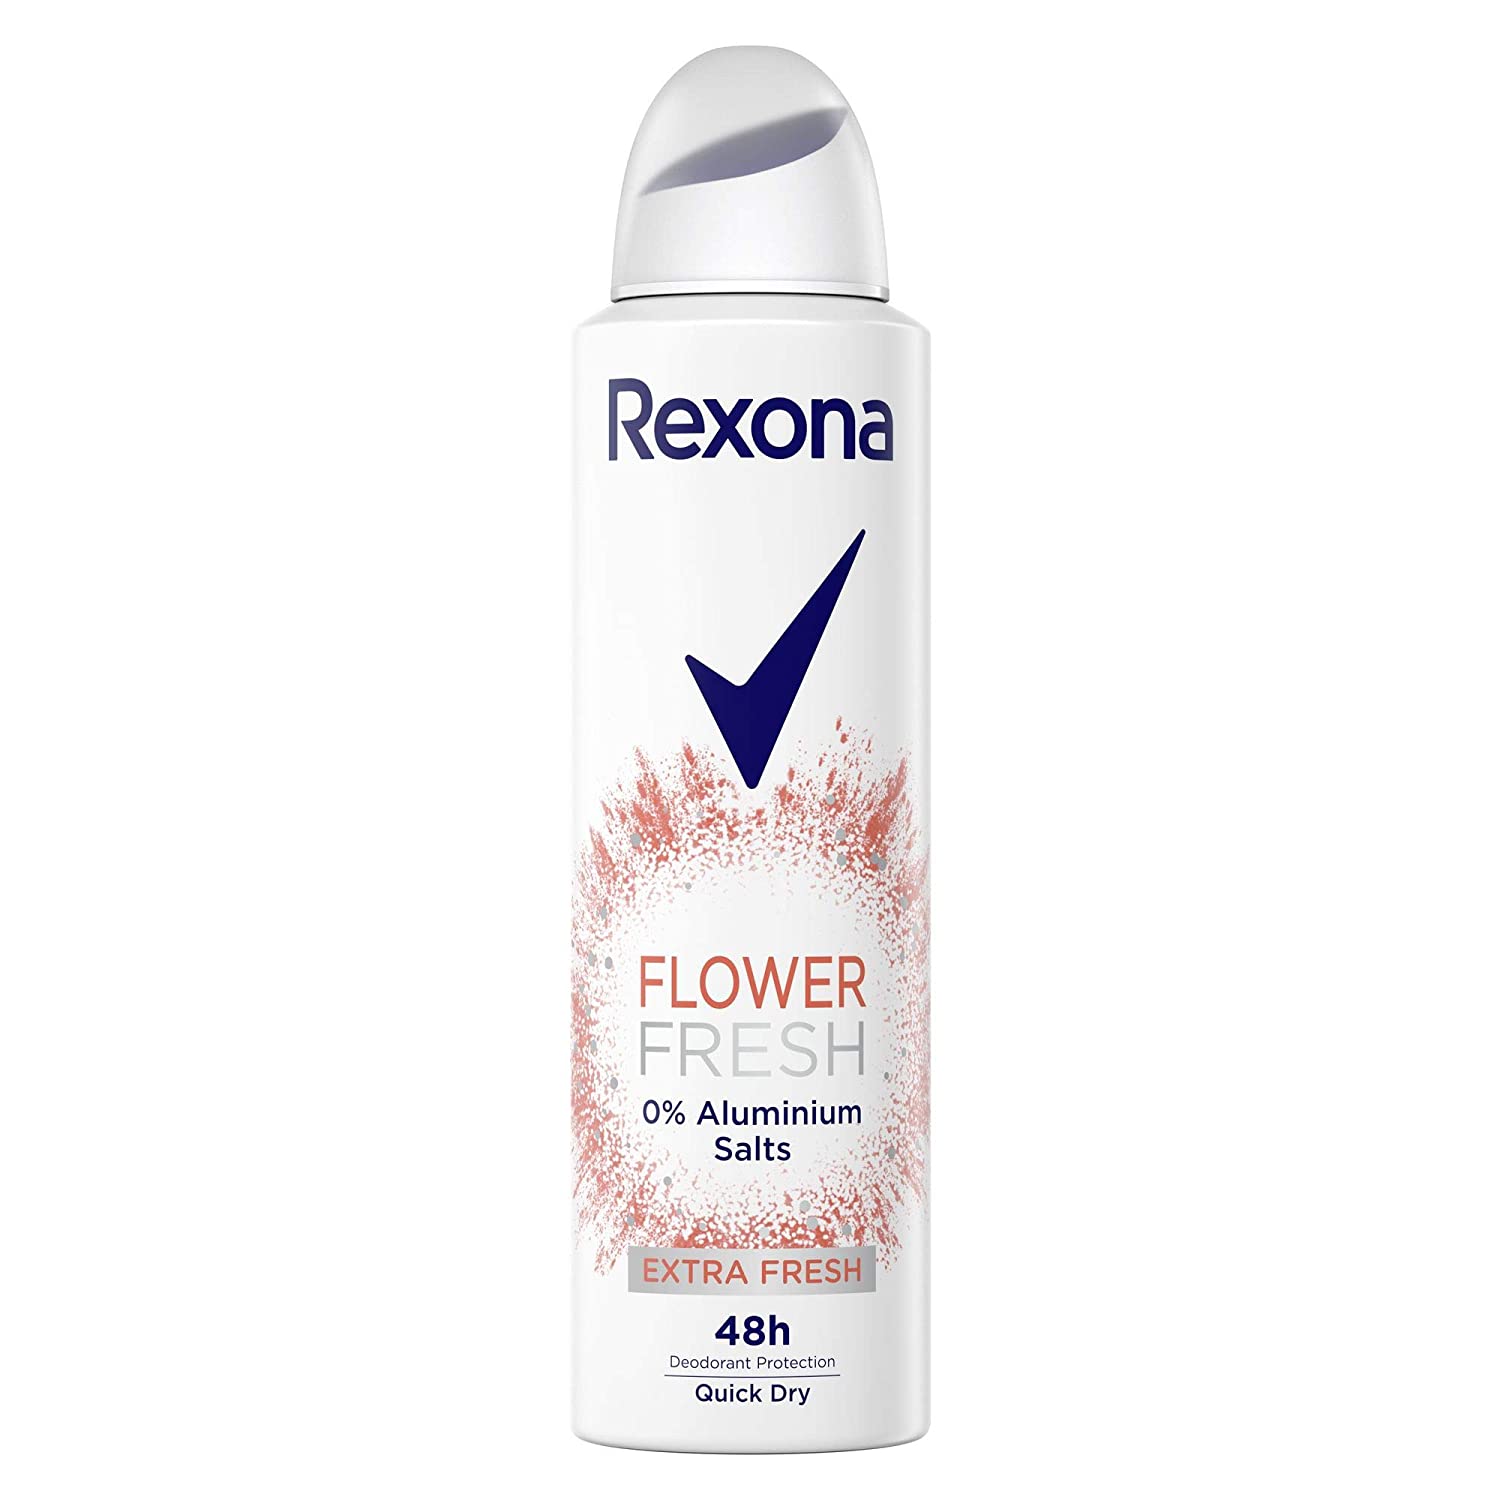 150 millilitre container of rexona flower fresh deodorant spray